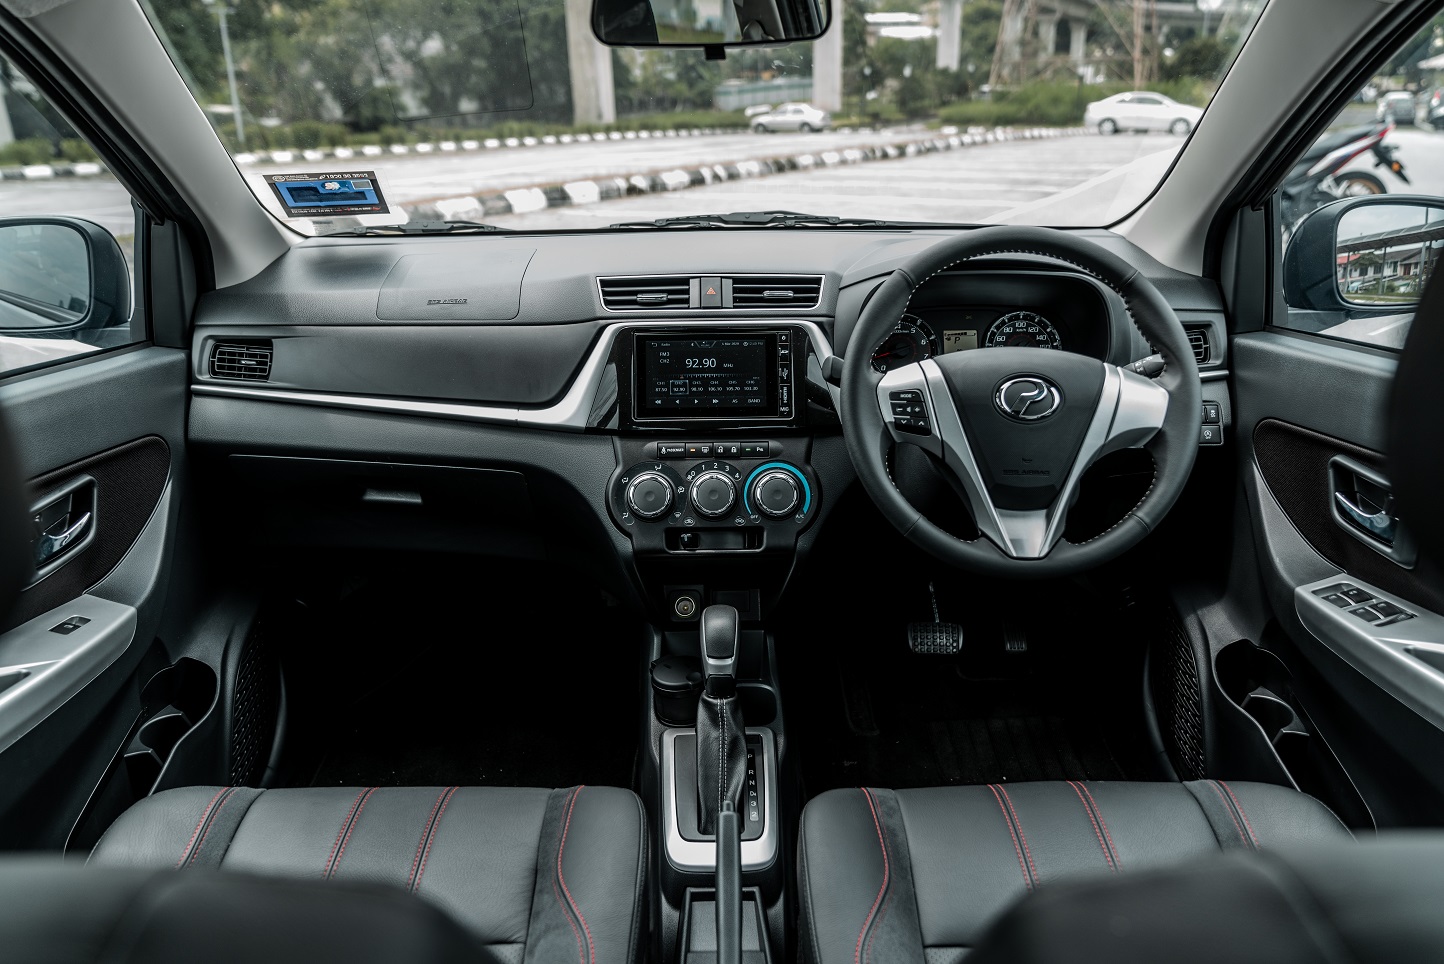 TopGear  Test Drive: 2020 Perodua Bezza 1.3L AV (RM49,890)